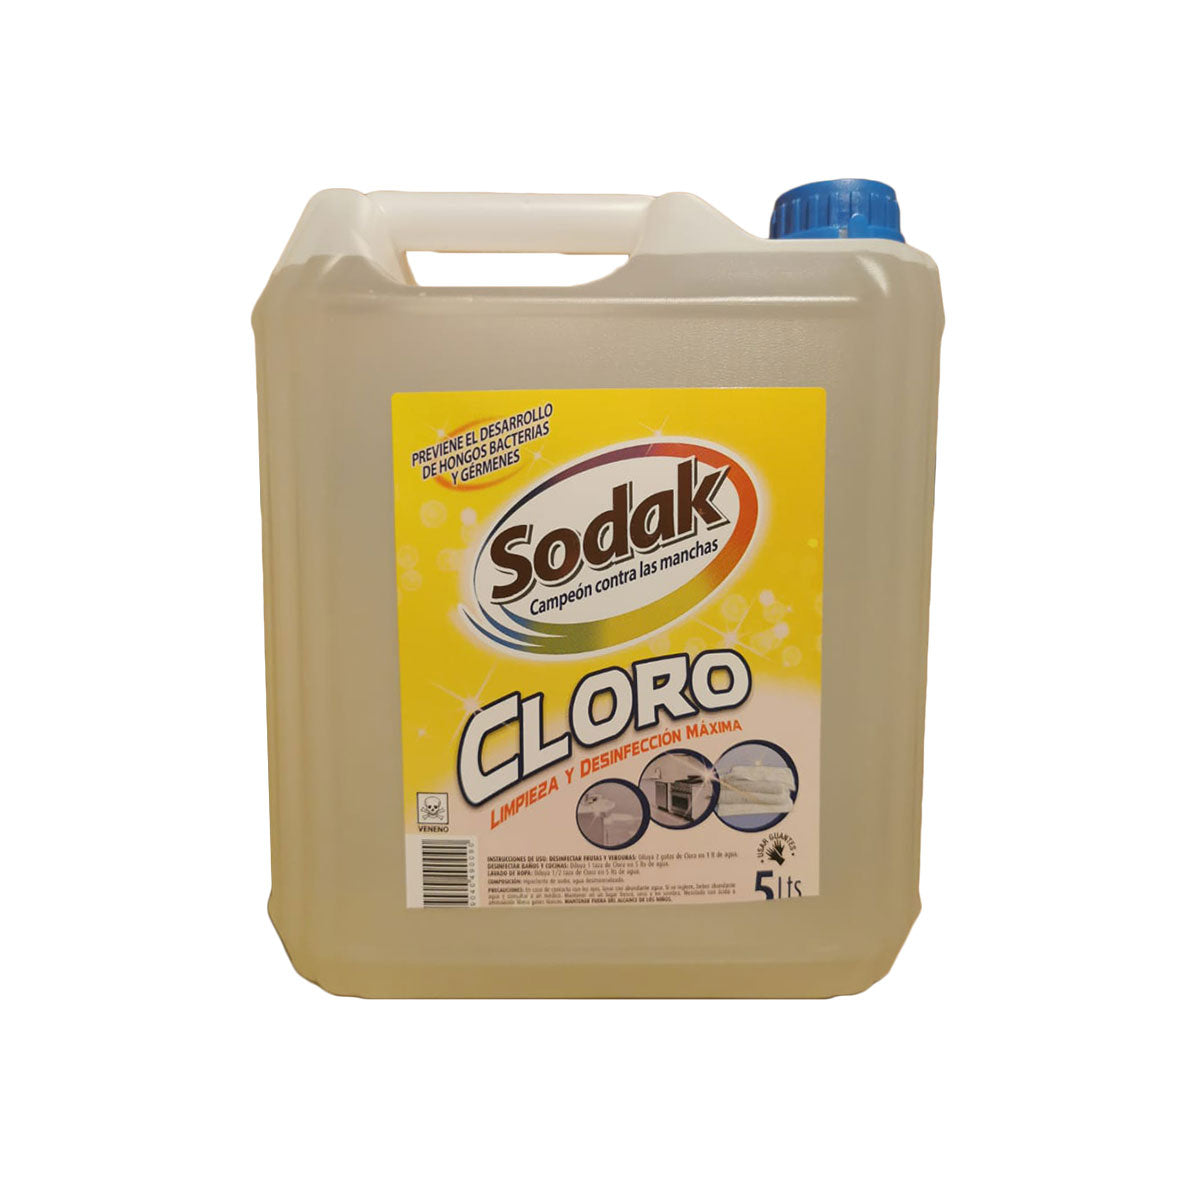 Cloro Ultra Concentrado Sodak 5 lts